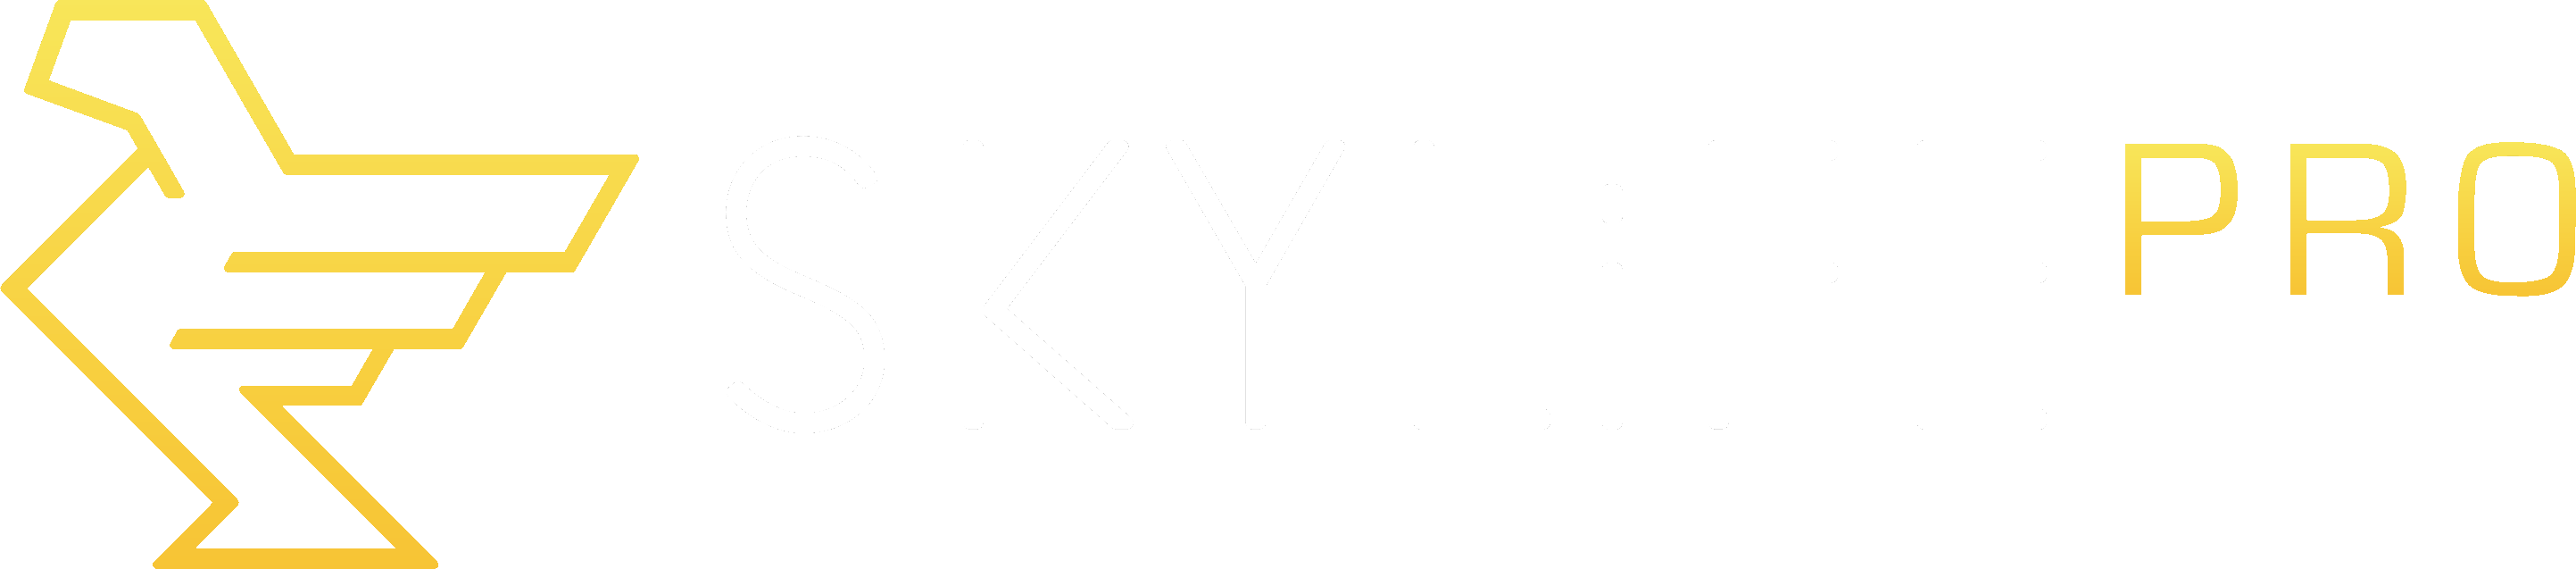 SkyLife Pro